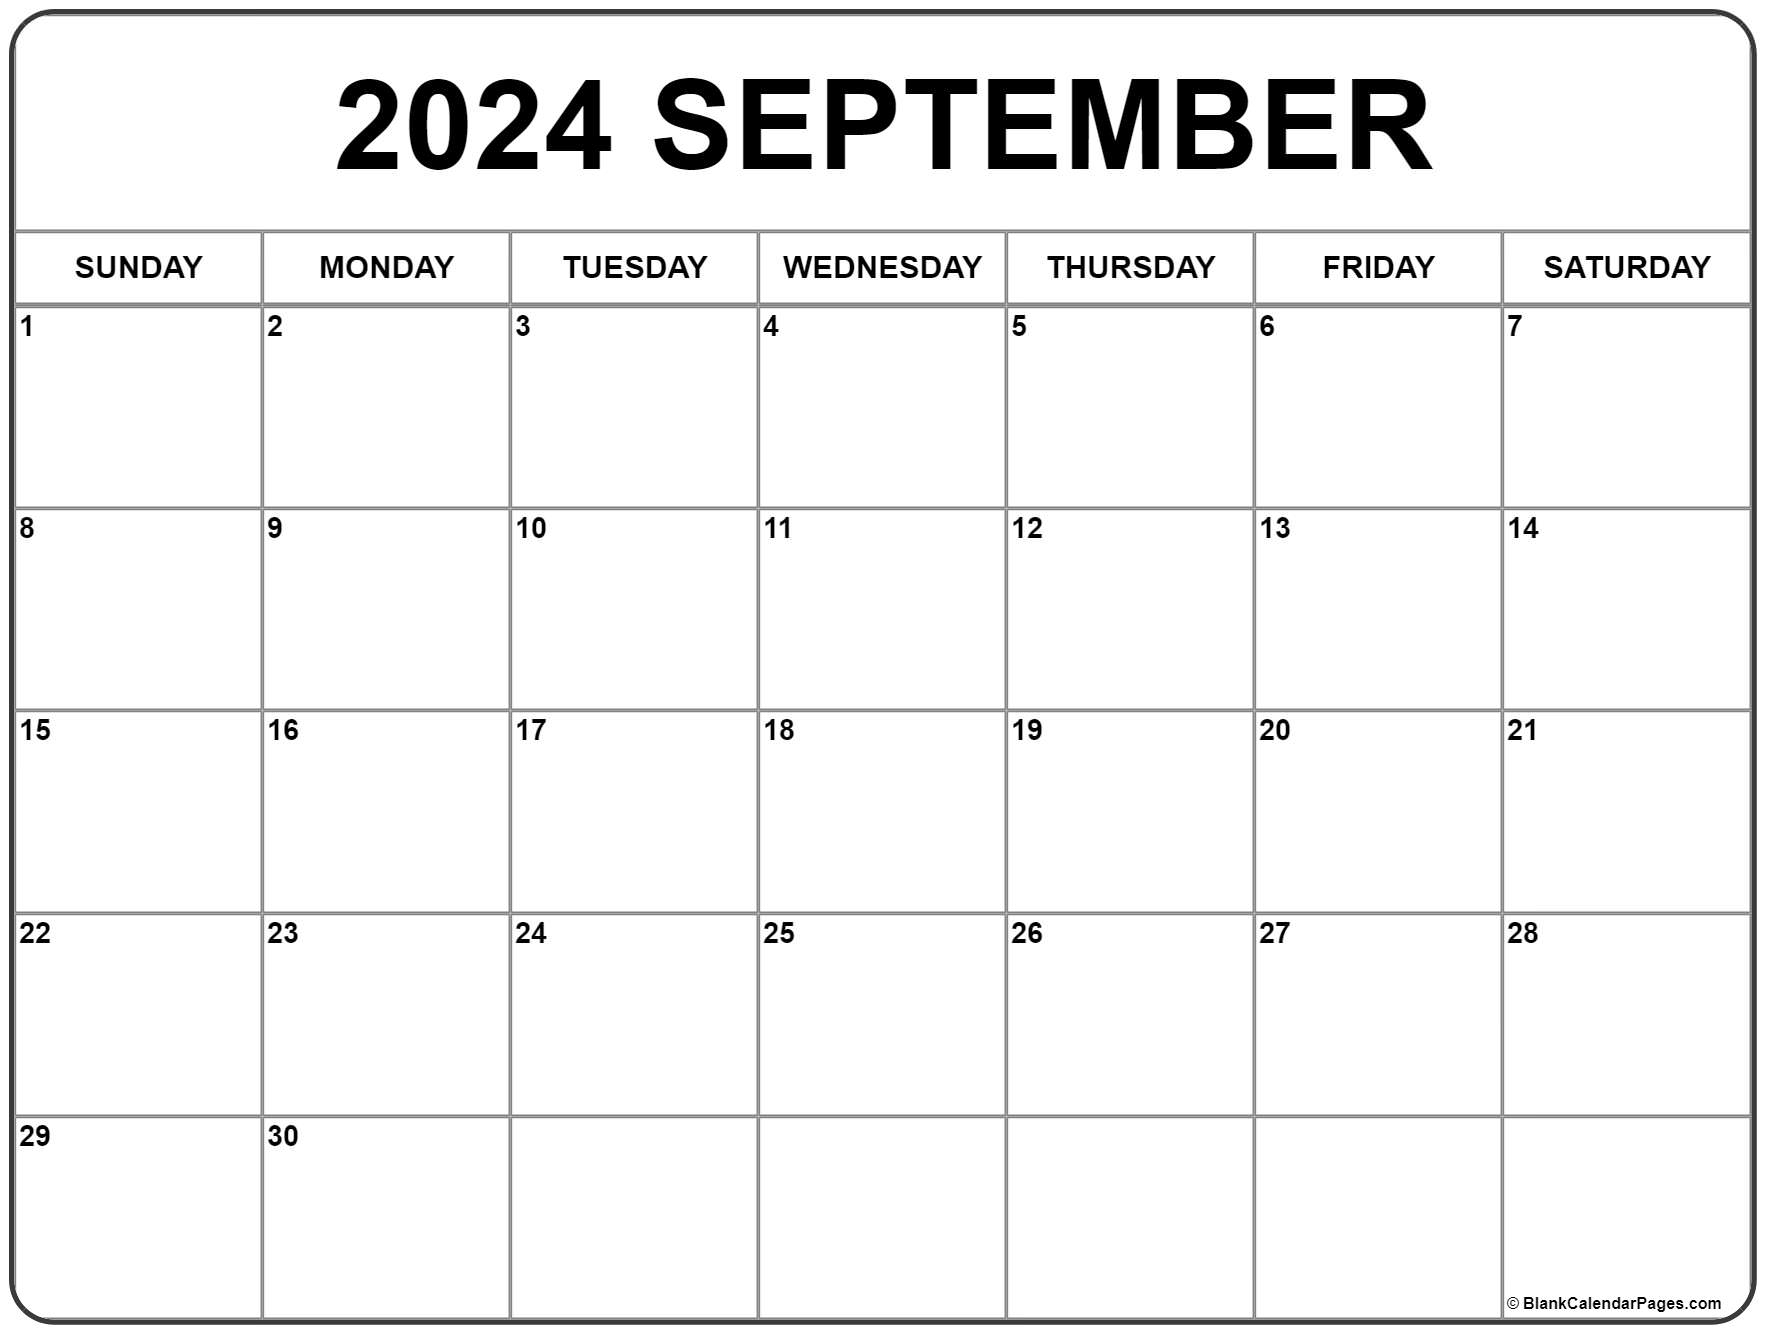 September 2024 Calendar | Free Printable Calendar for September 2024 Calendar Printable